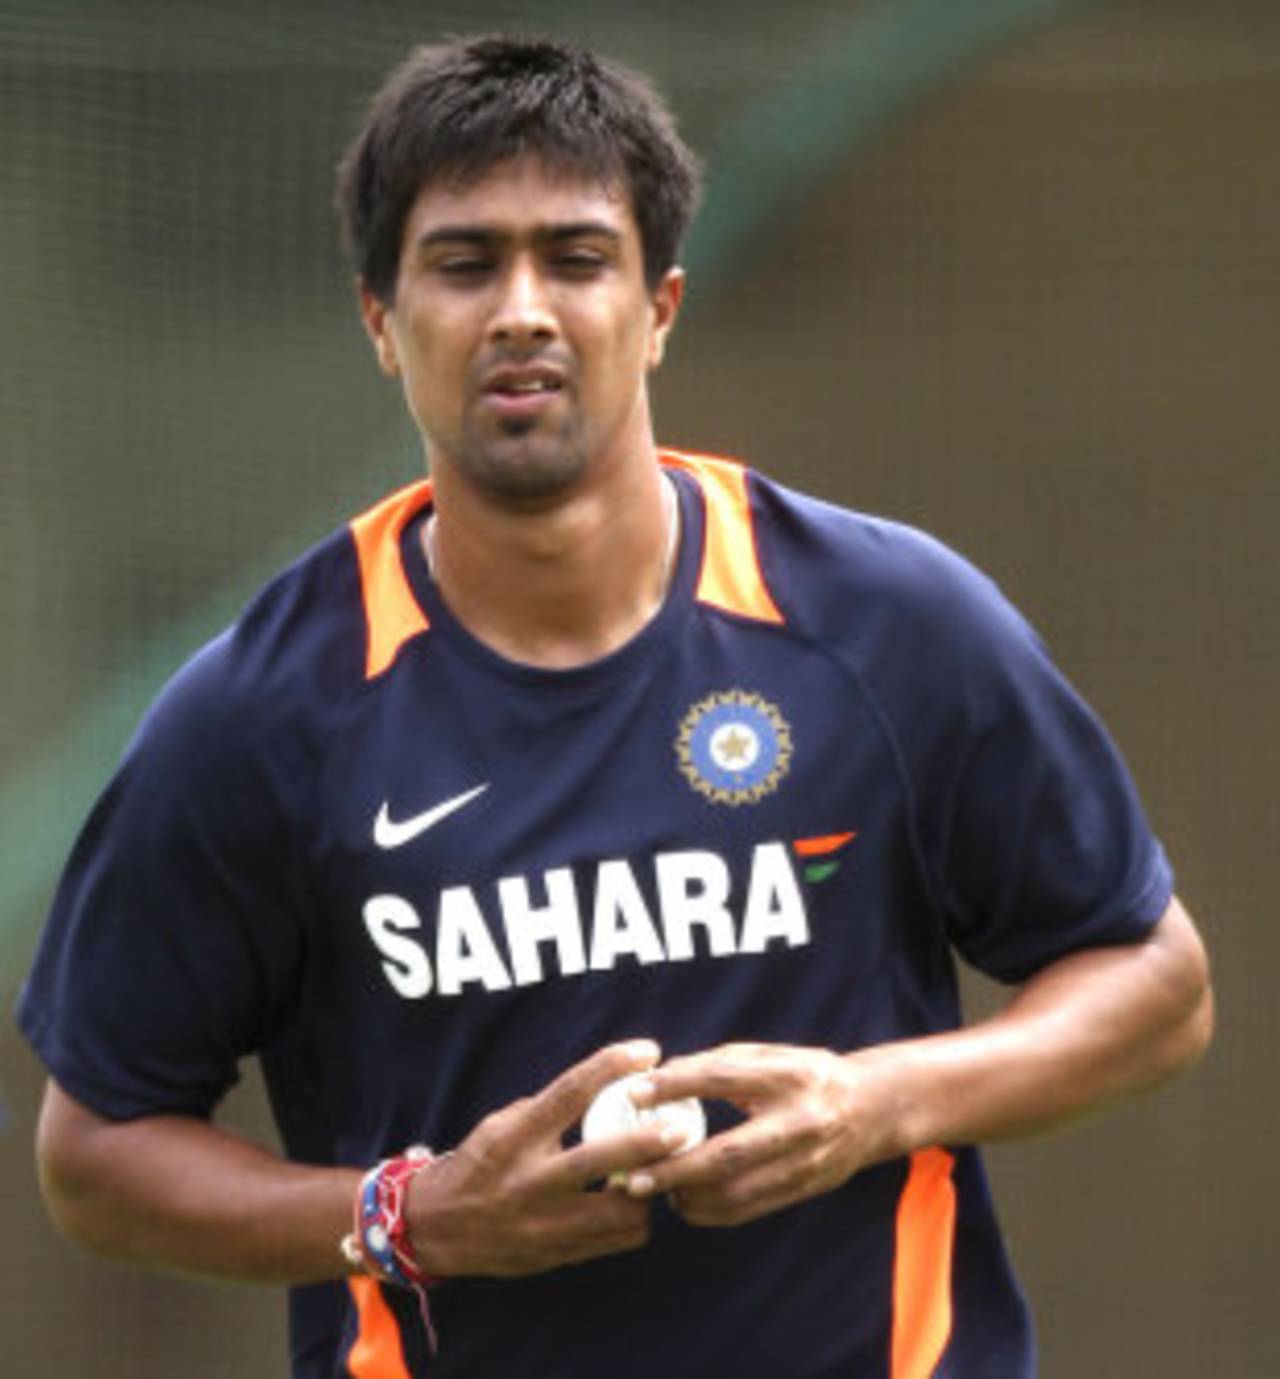 Rahul Sharma gets ready to bowl, Sydney, January 31, 2012